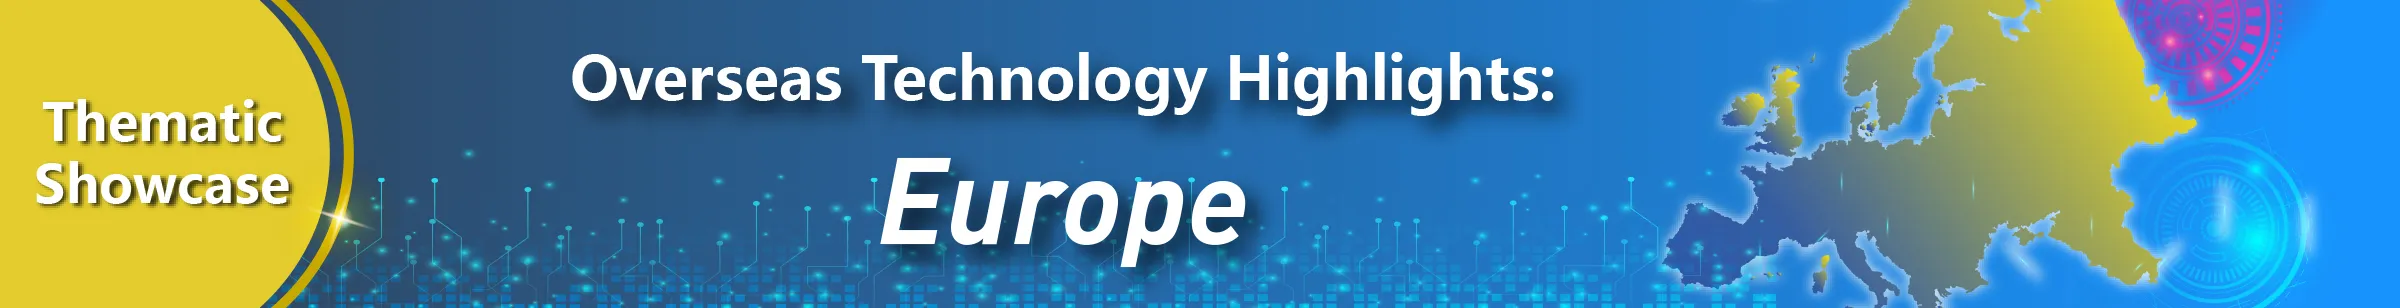 Overseas Technology Highlights: Europe